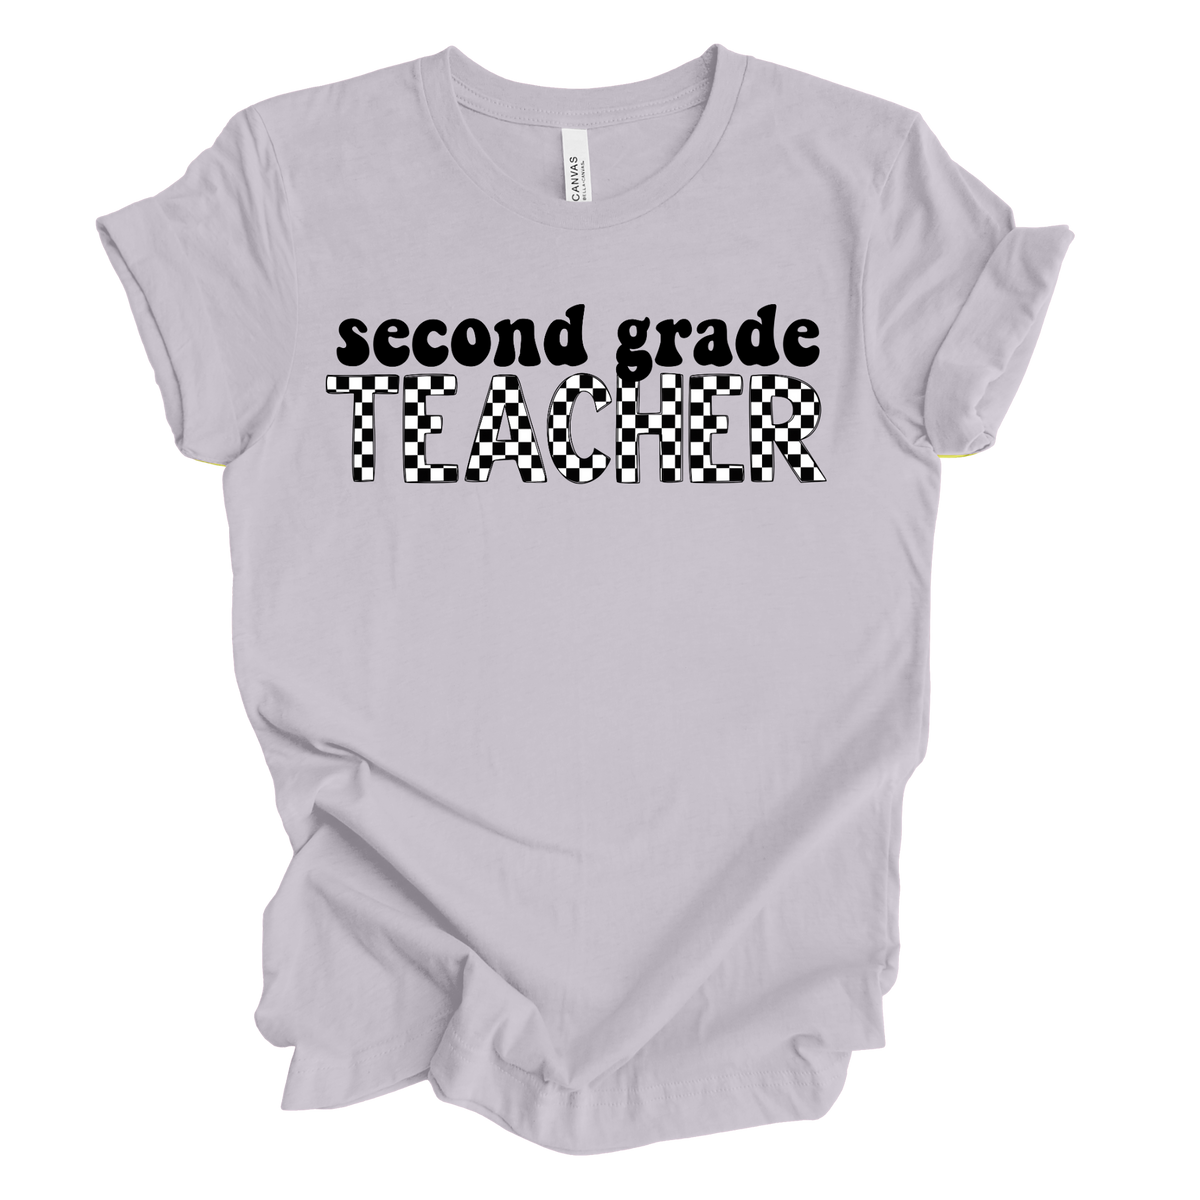 Checkered Second Grade Tee